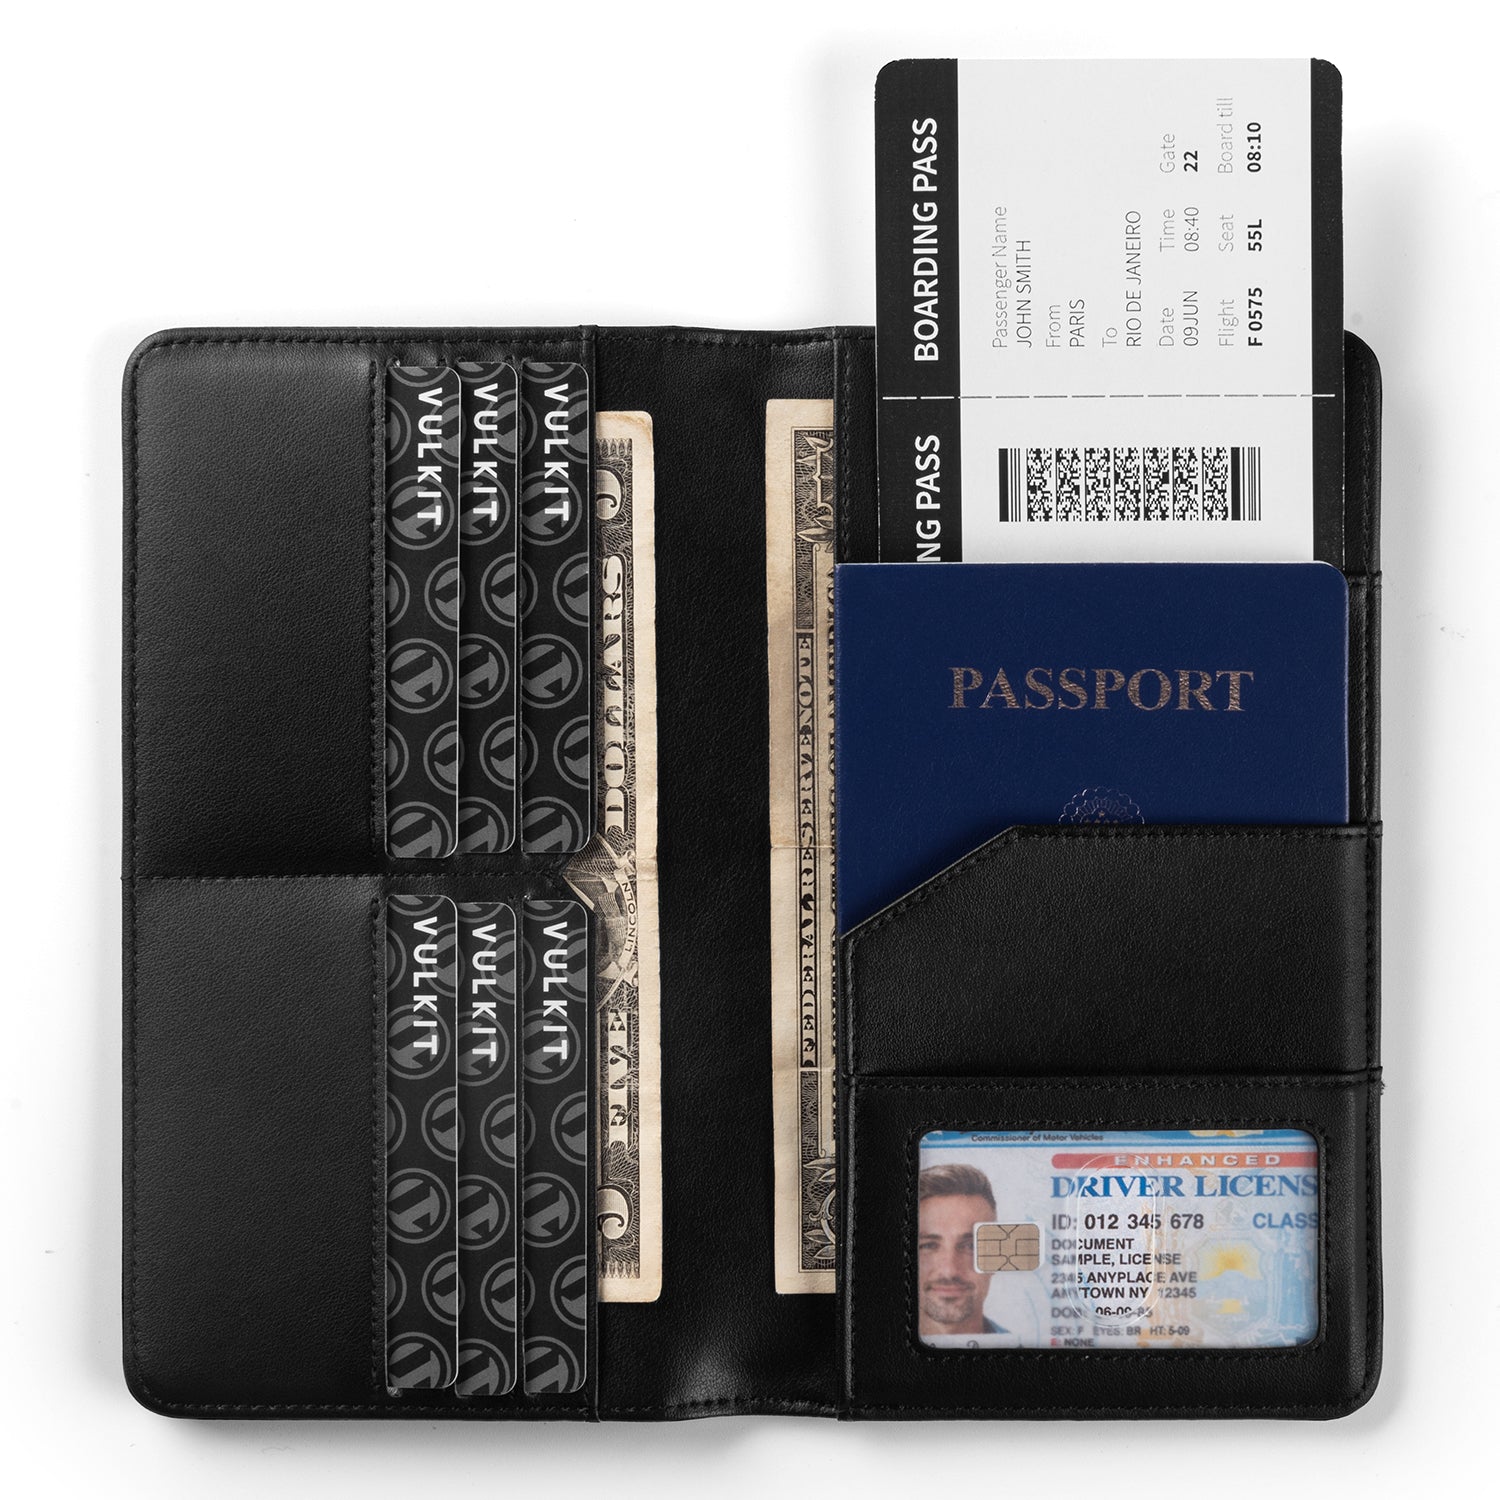 VPW100- Bifold Passport Holder For Cash, Bills and Cards